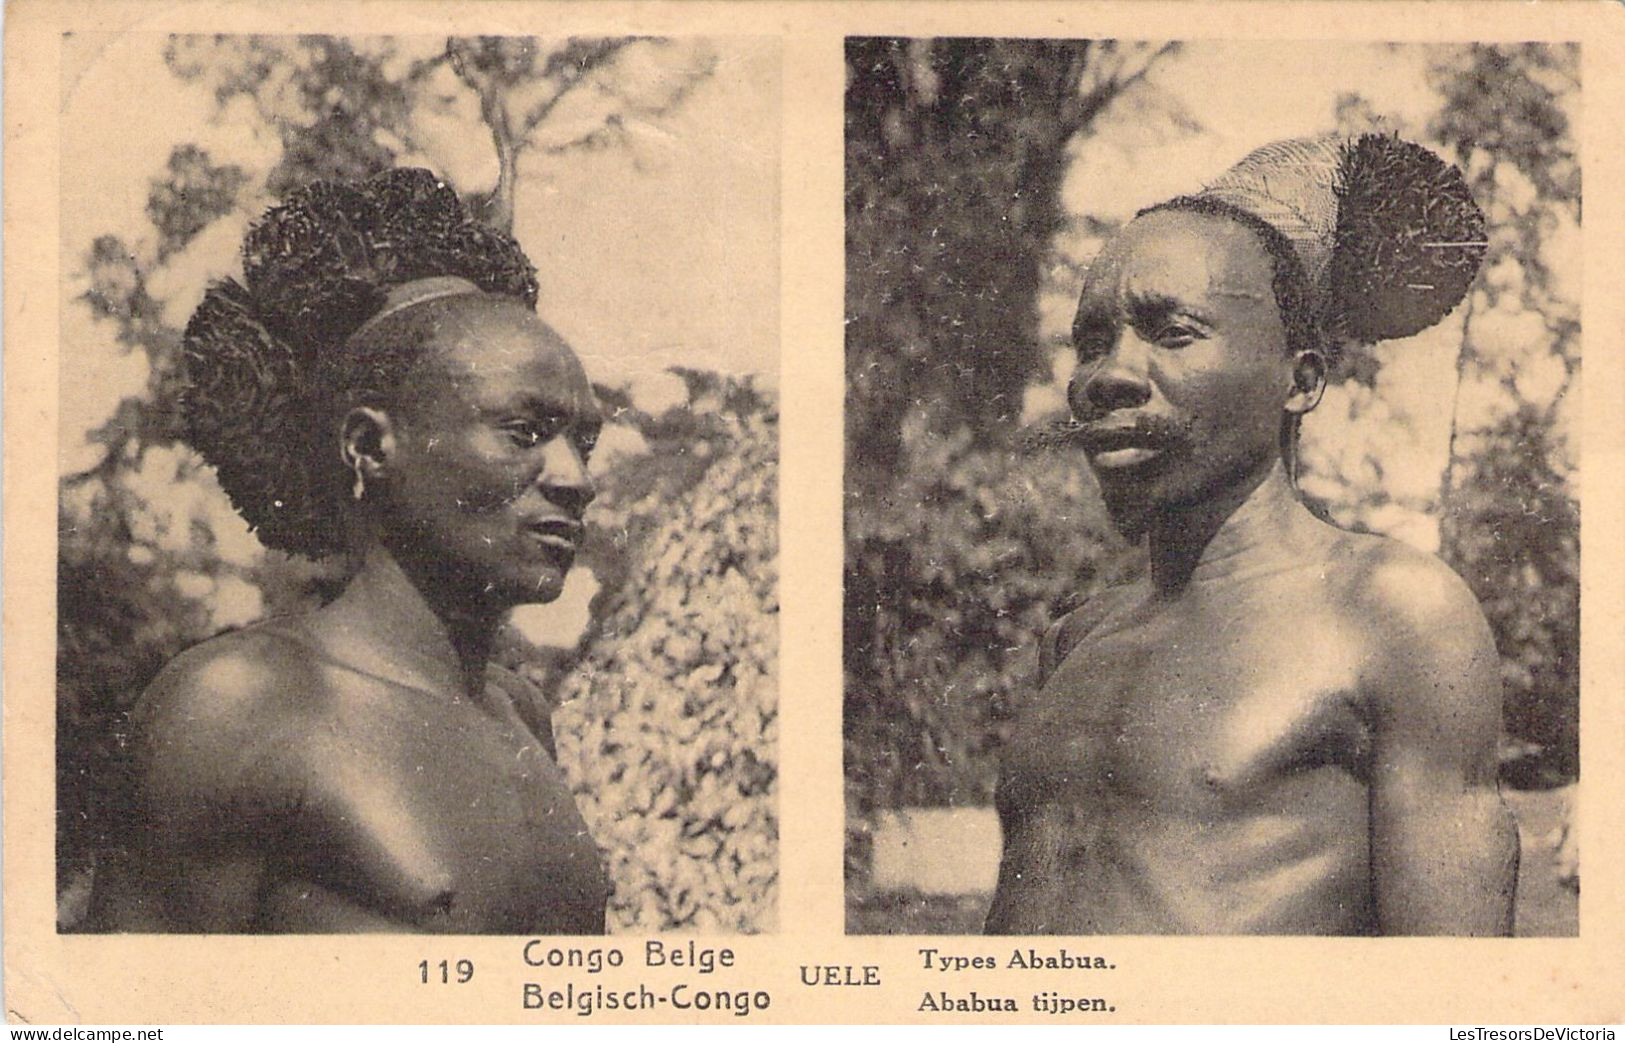 CONGO BELGE - UELE - Types Ababua - Carte Postale Ancienne - Belgian Congo